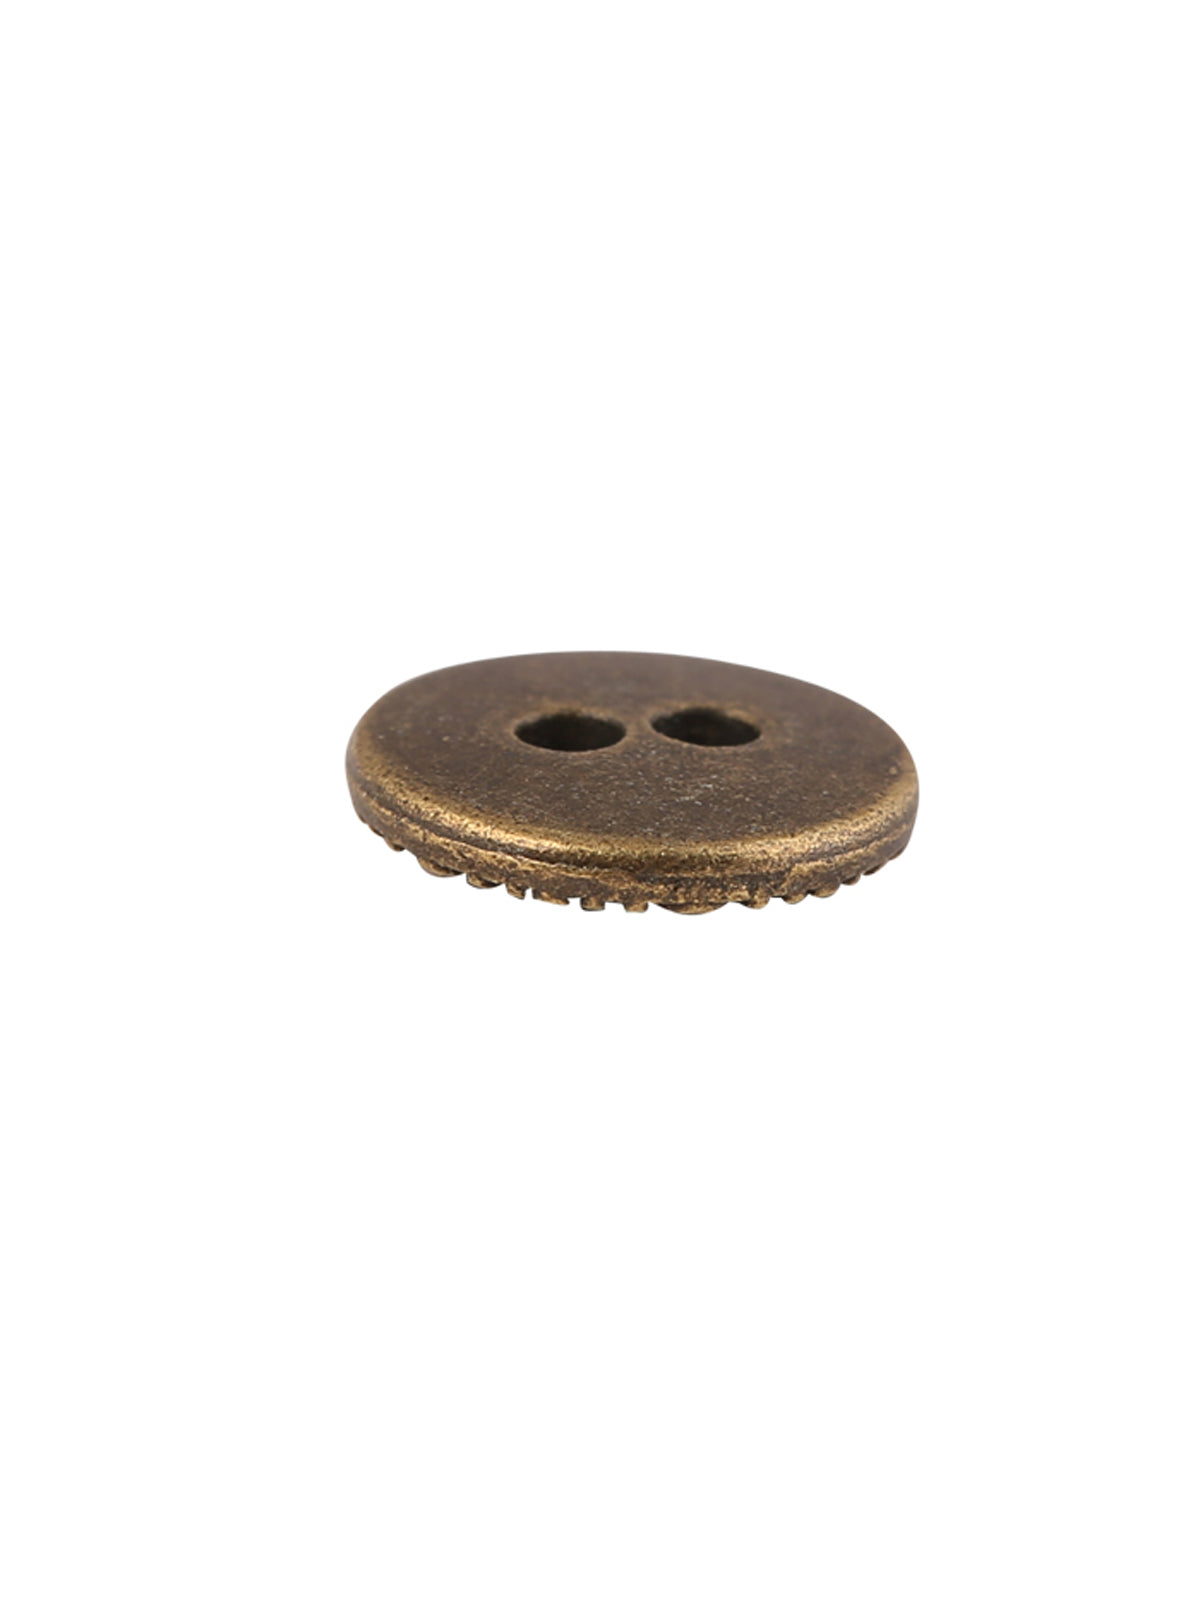 Decorative Round Shape 2-Hole Metal Button